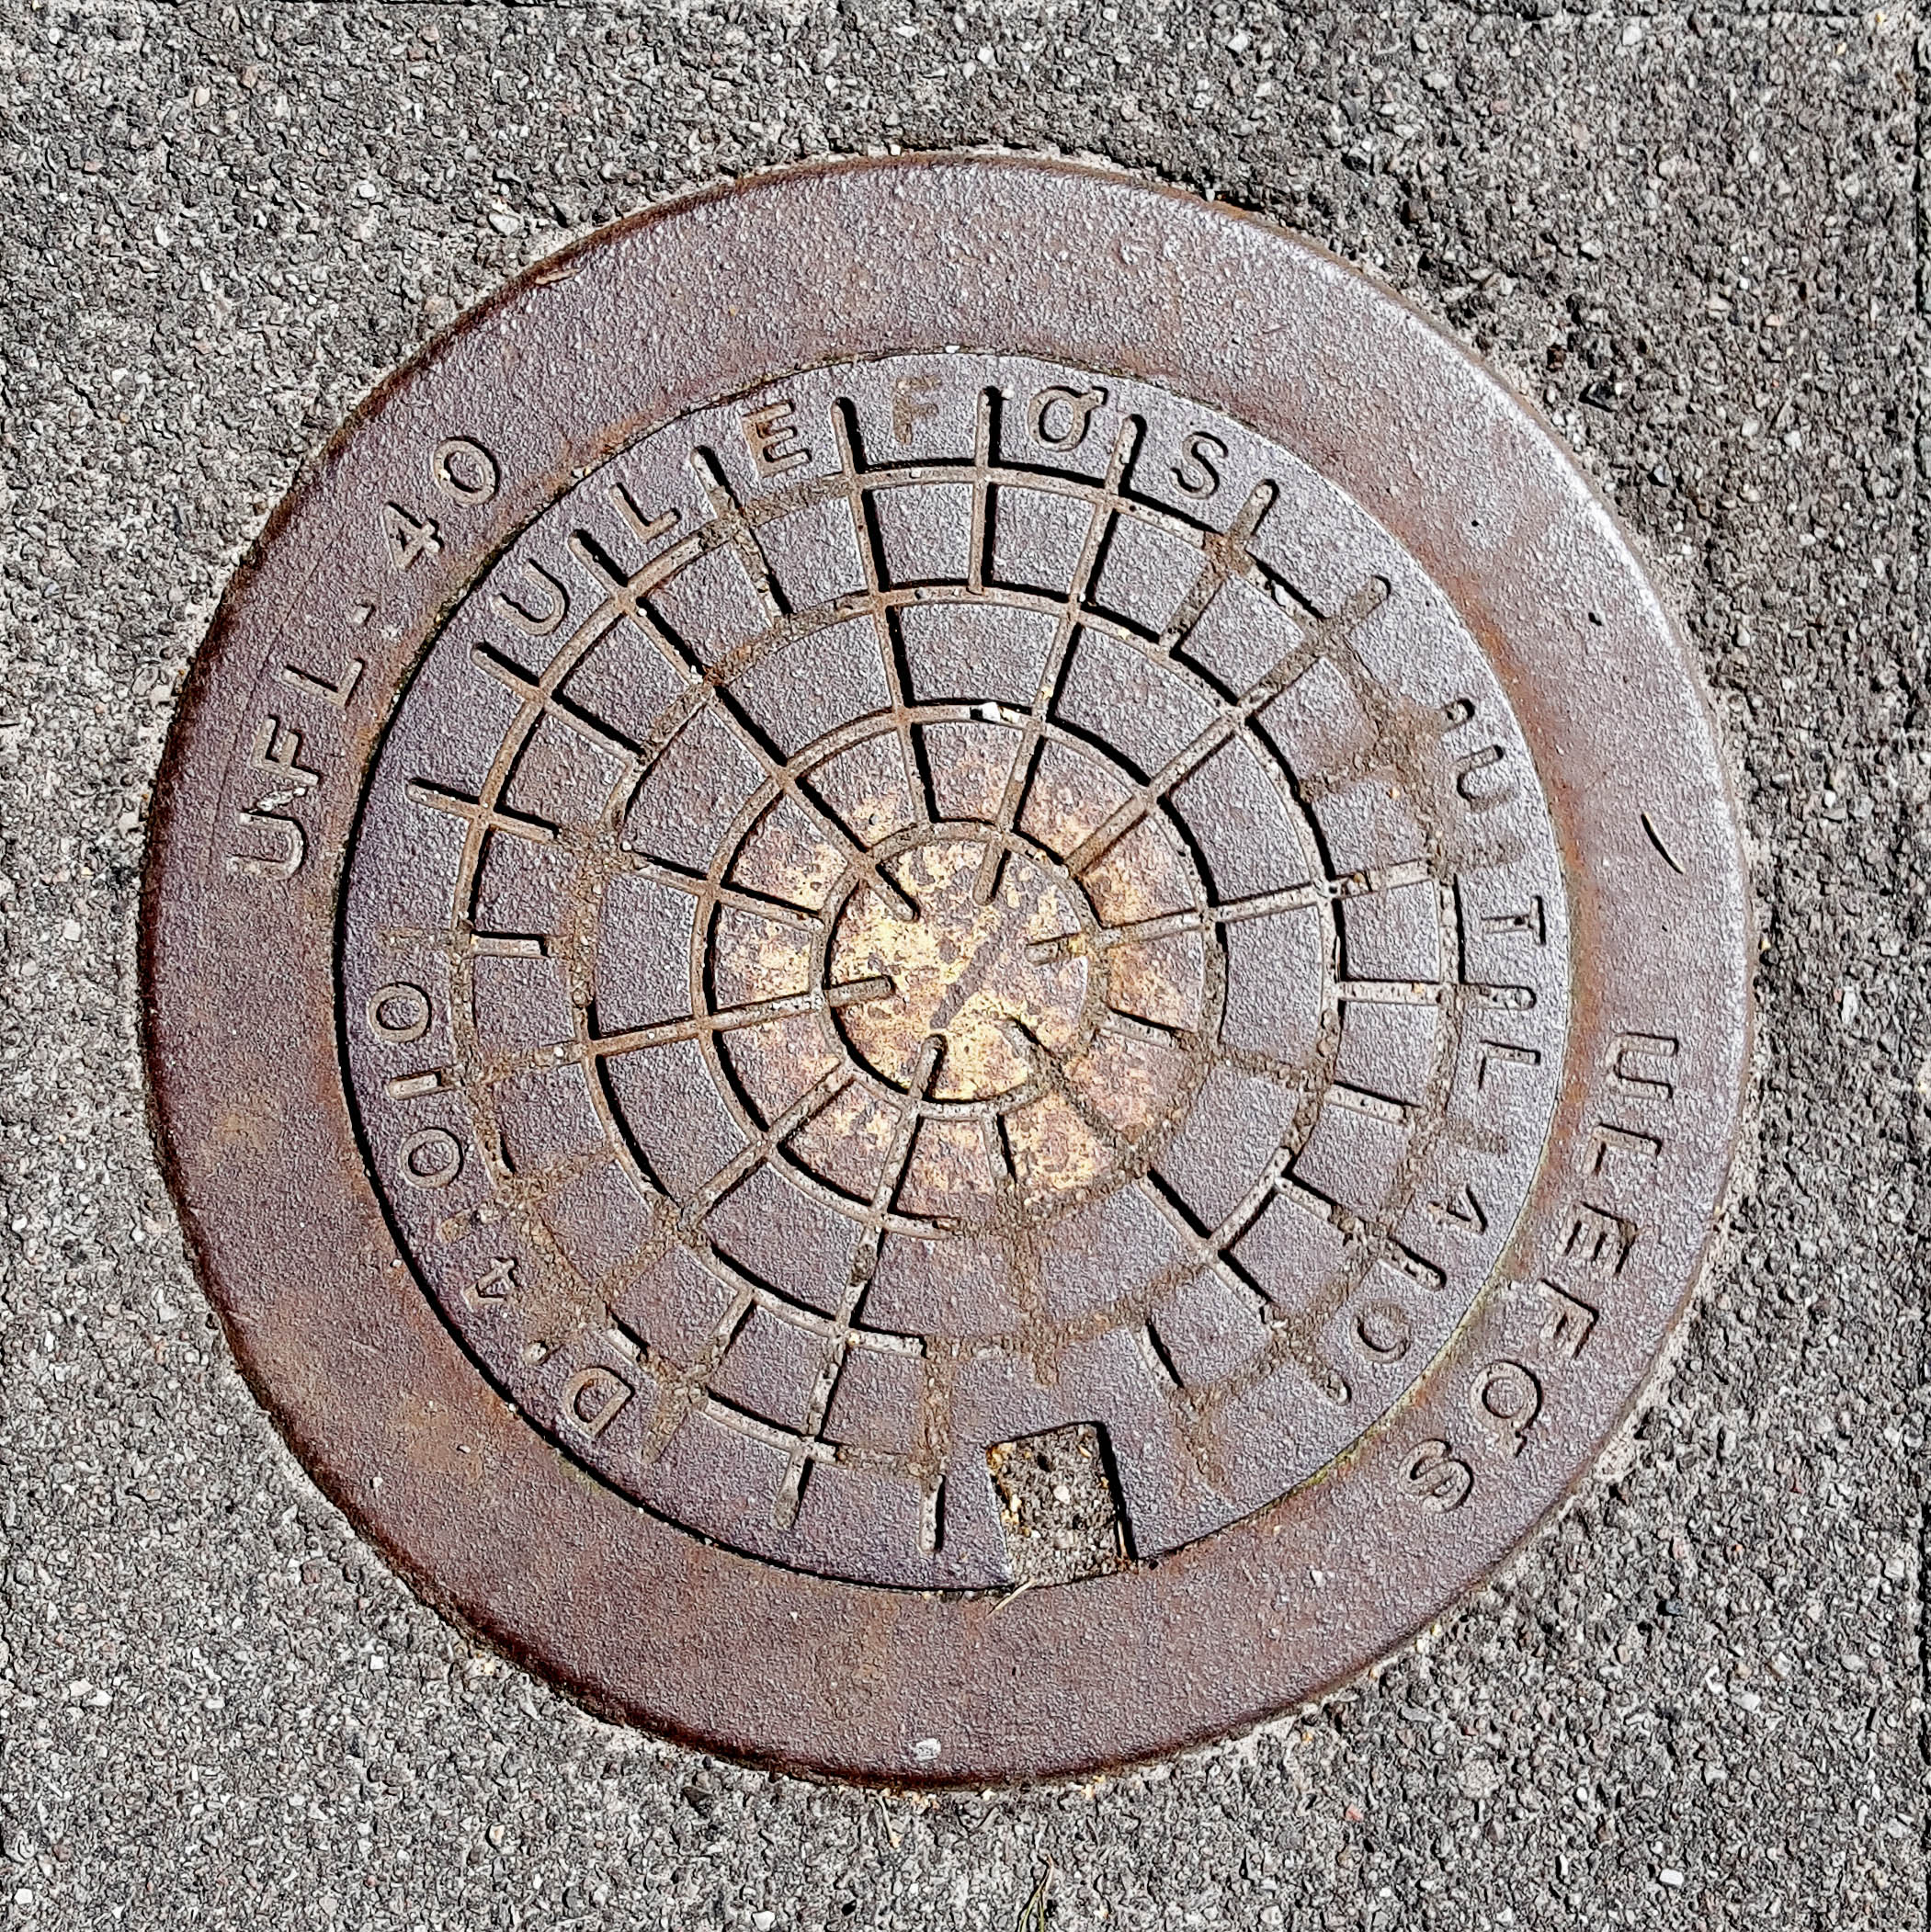 Manhole Cover, Frederiksvark Denmark - Cast iron surround inscribed with Ulefos UFL.40 - Inner, circular grid pattern